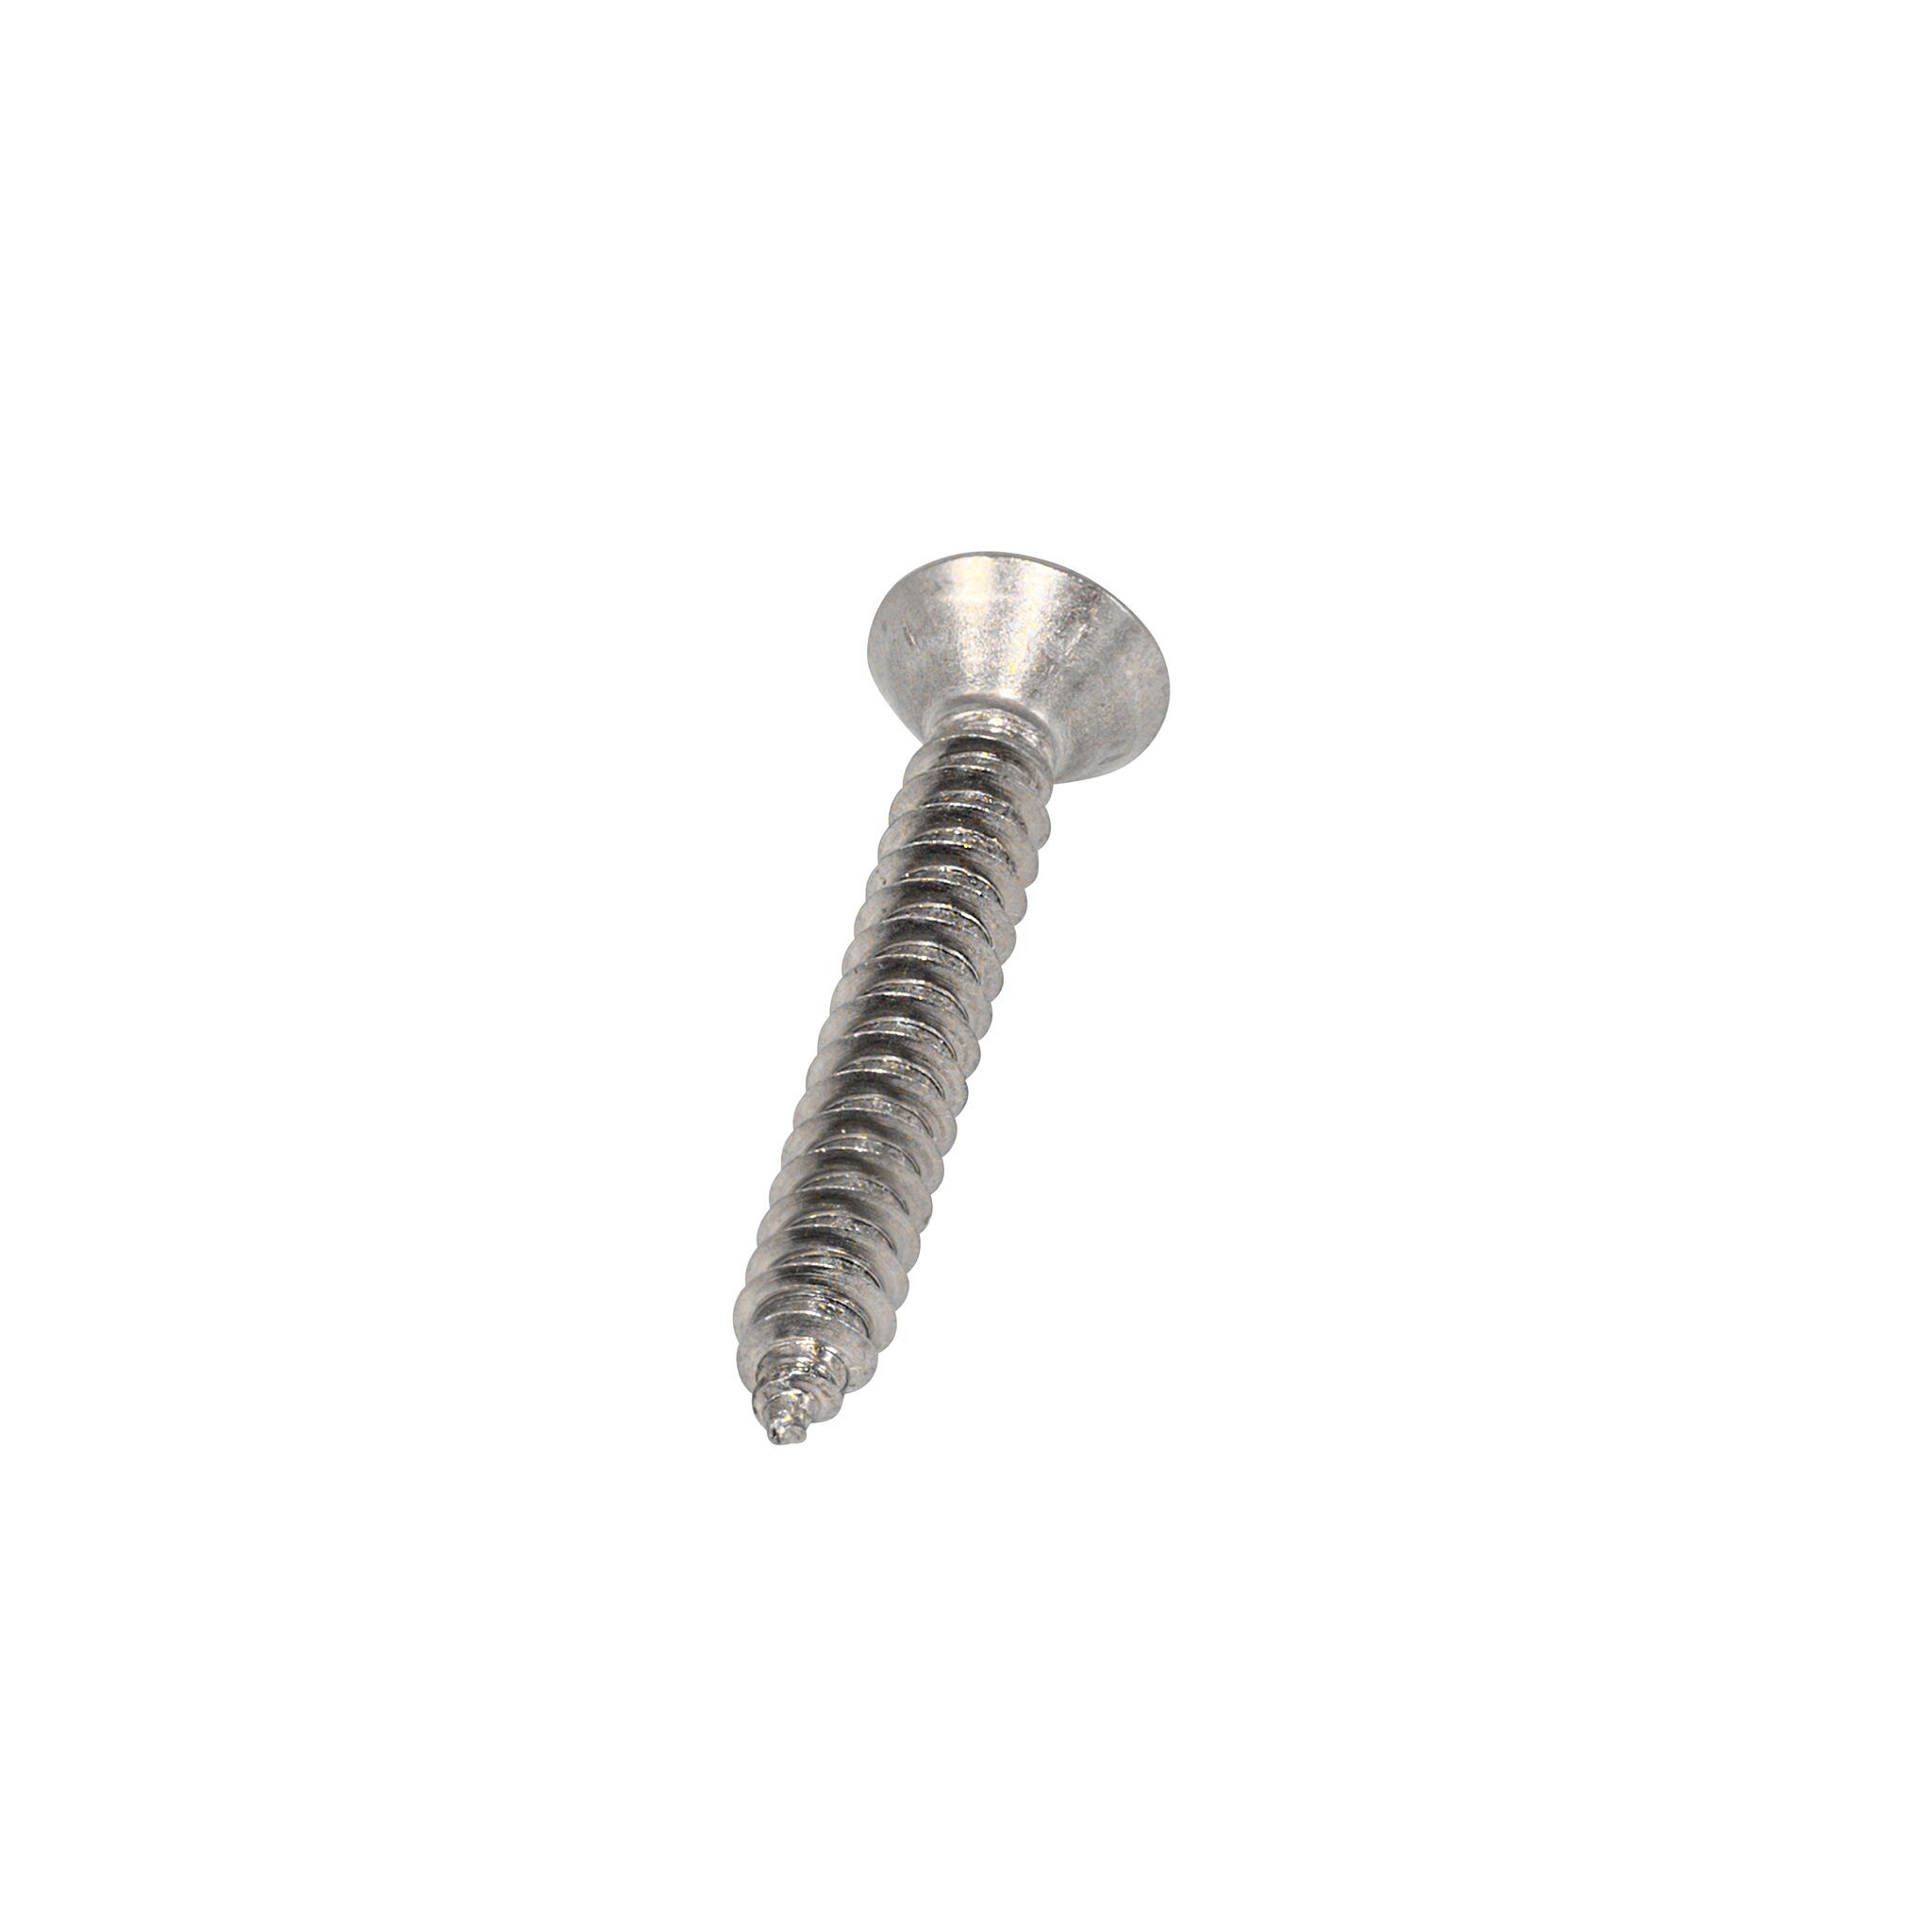 Countersunk self-tapping screw (DIN 7982-A4)